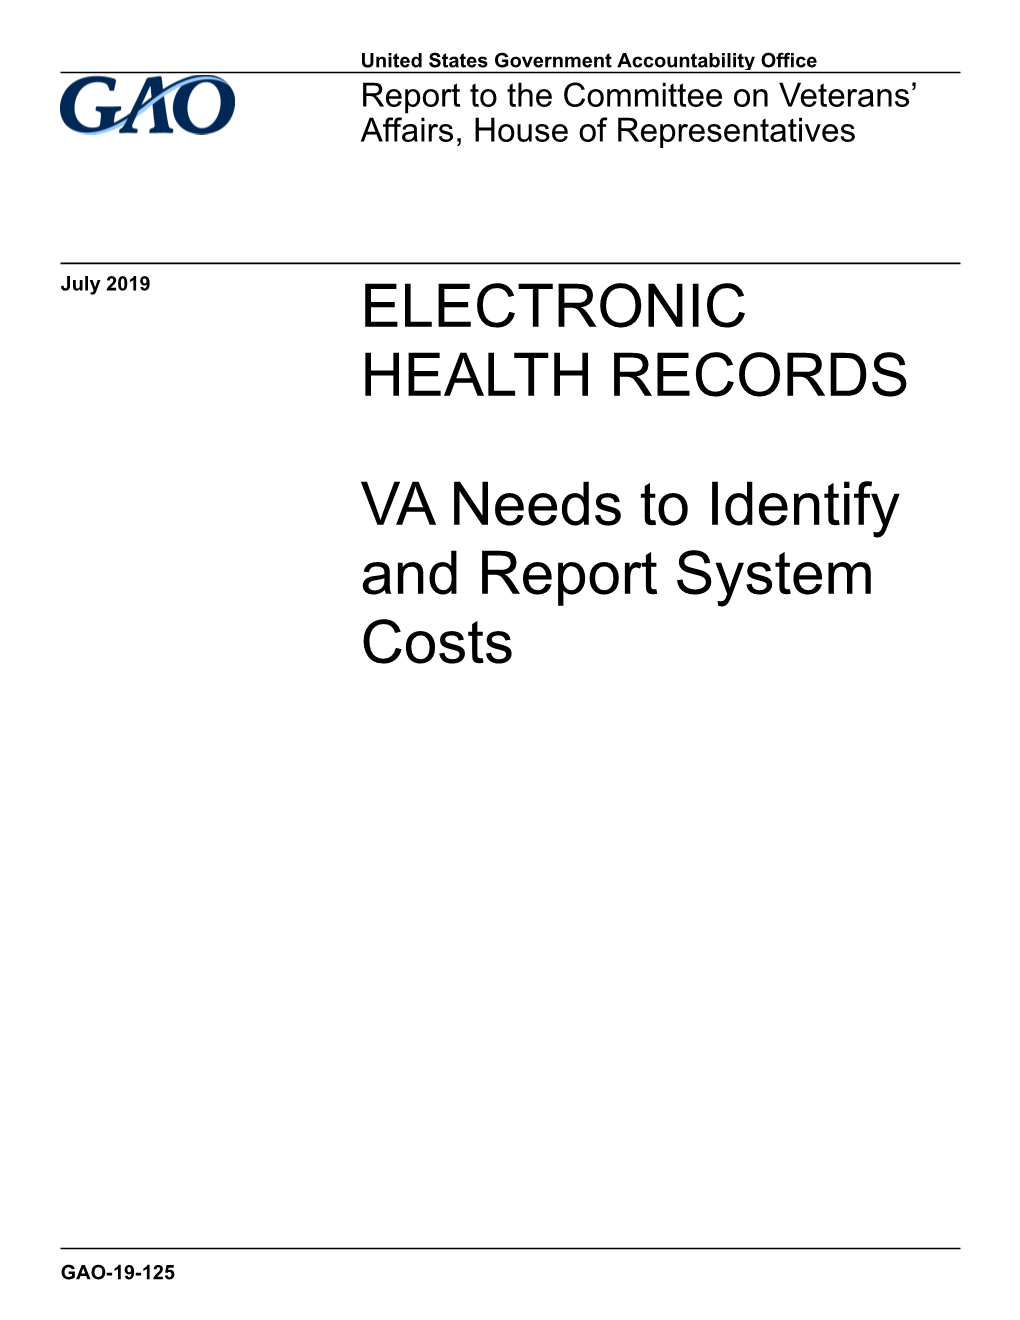 GAO-19-125, ELECTRONIC HEALTH RECORDS: VA Needs to Identify